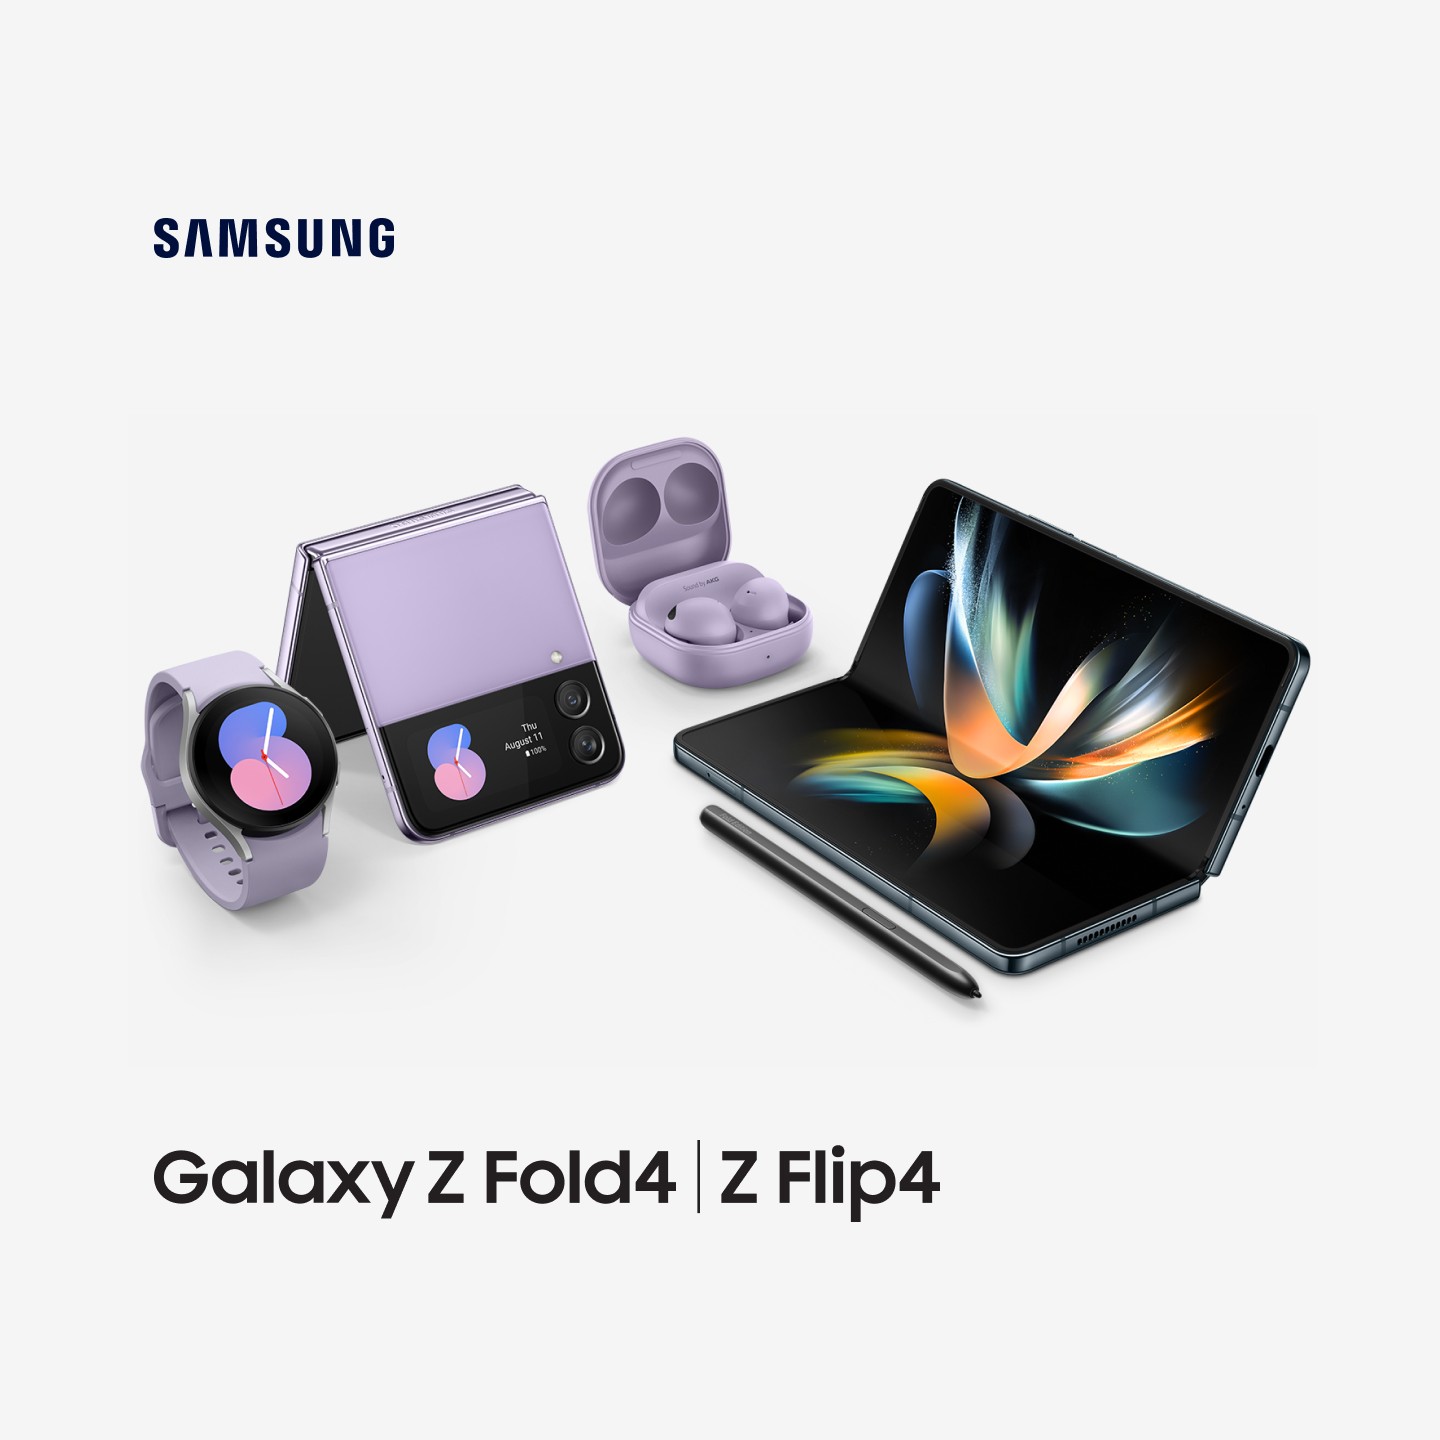 Galaxy Z Fold4 og Galaxy Z Flip4: Flip ud over den nye Galaxy Z-serie